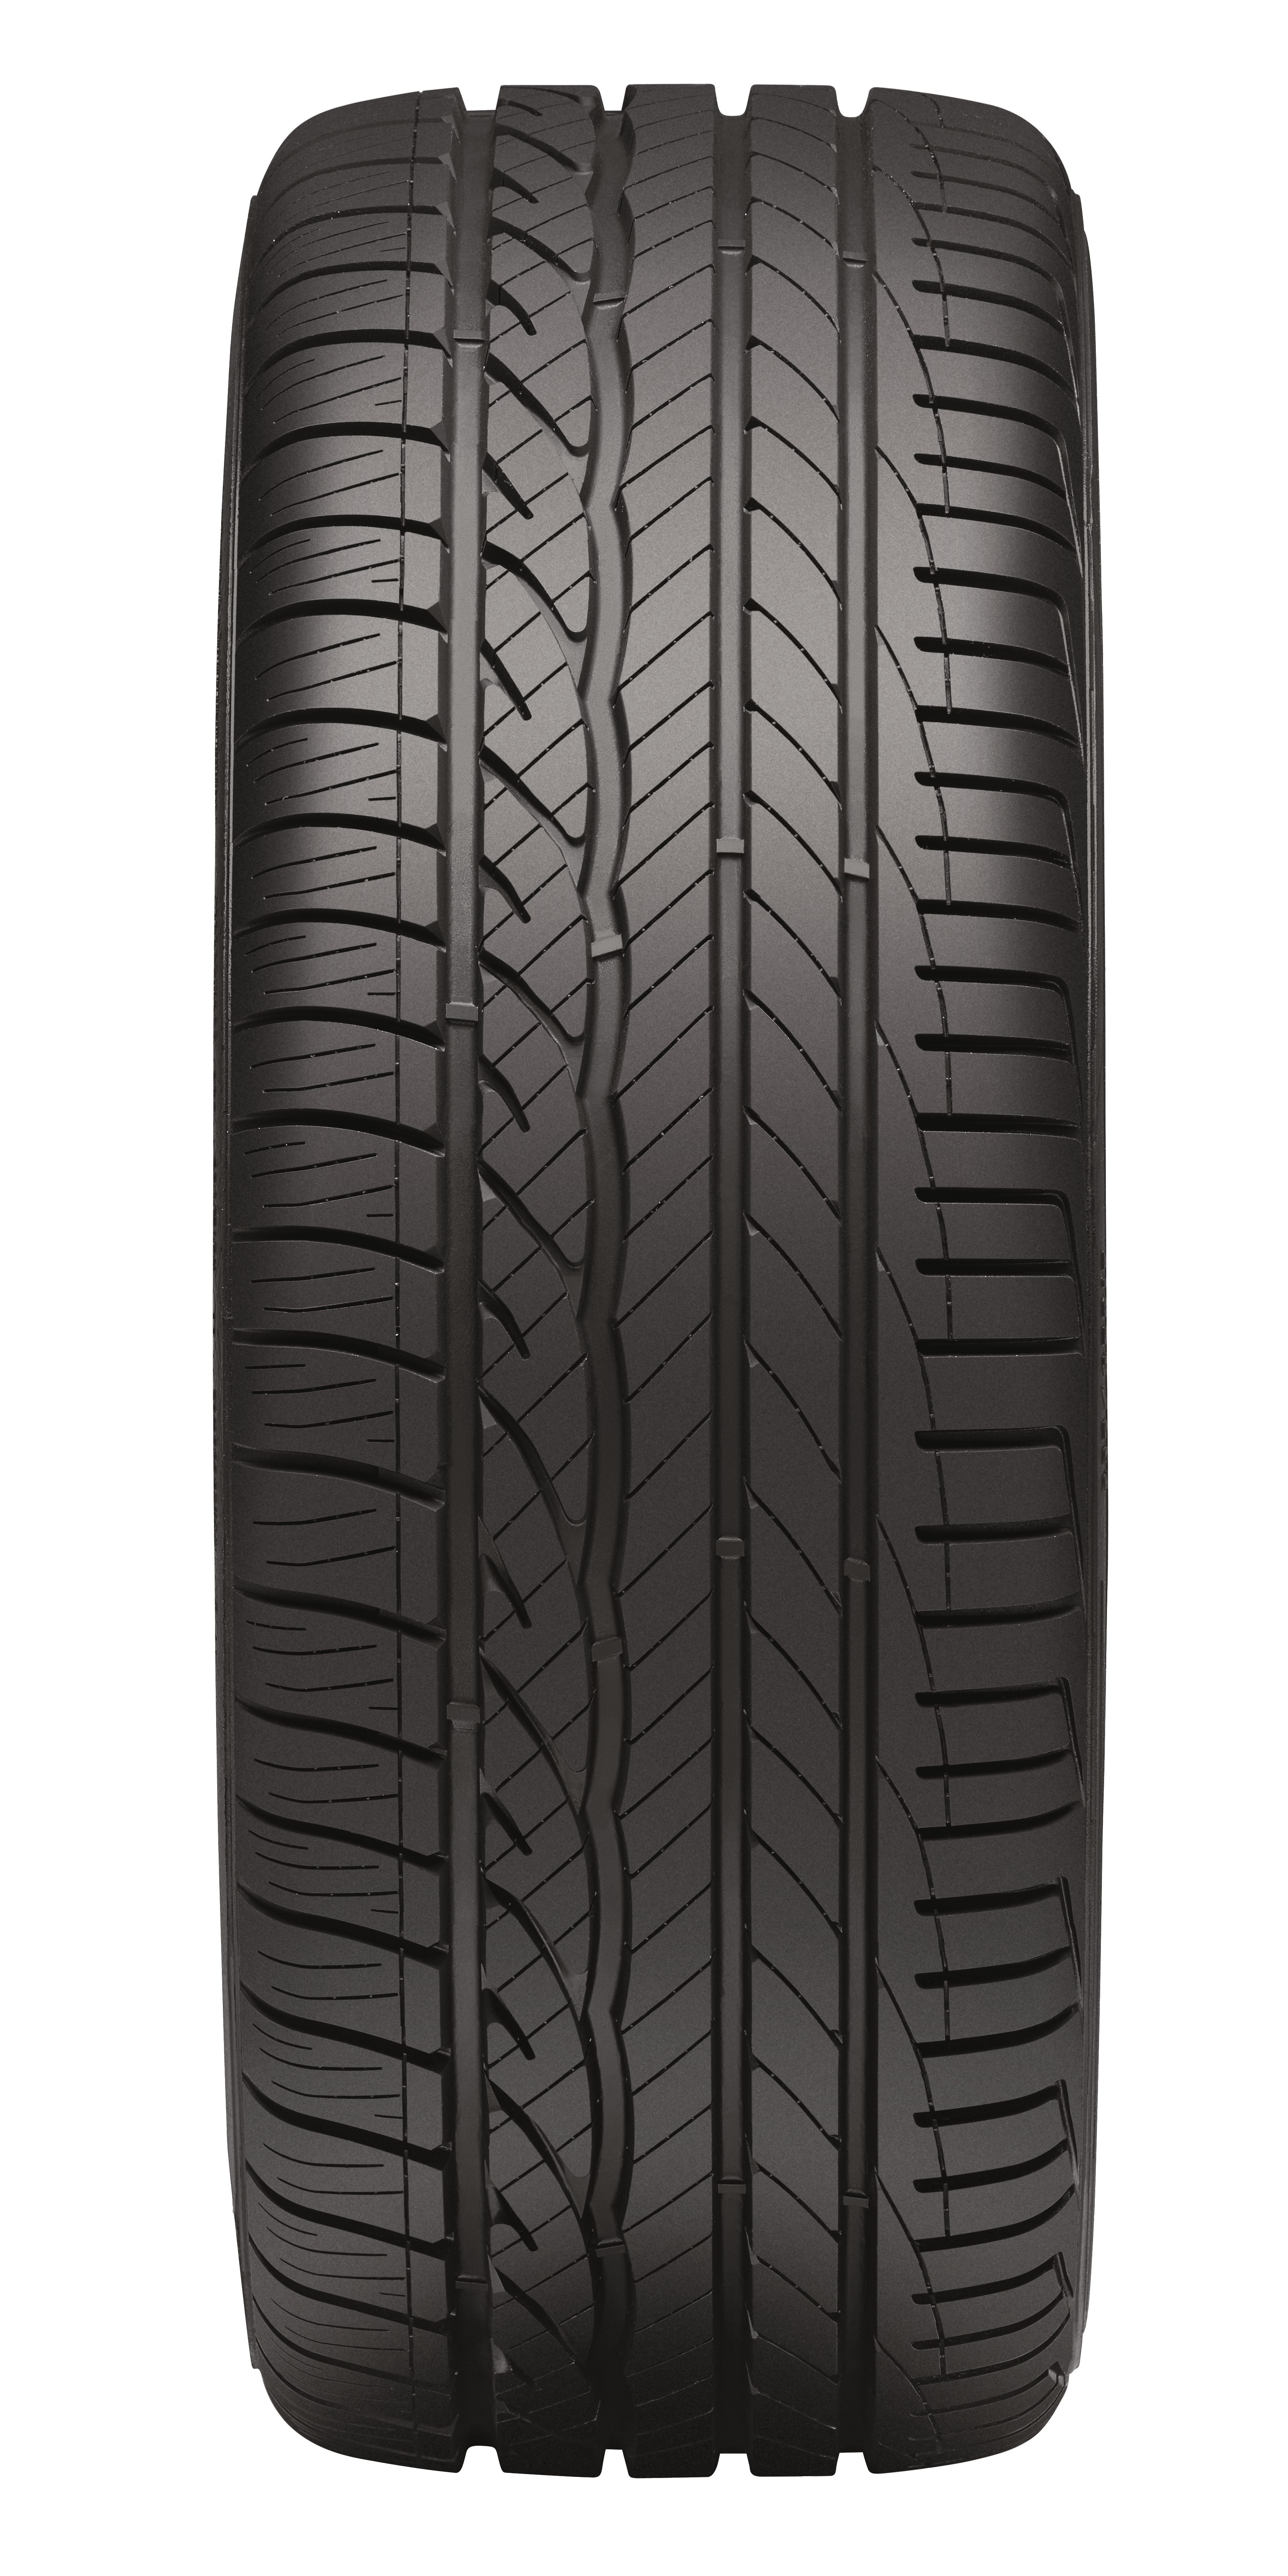 Dunlop Signature HP 215/45R18 93 W Tire